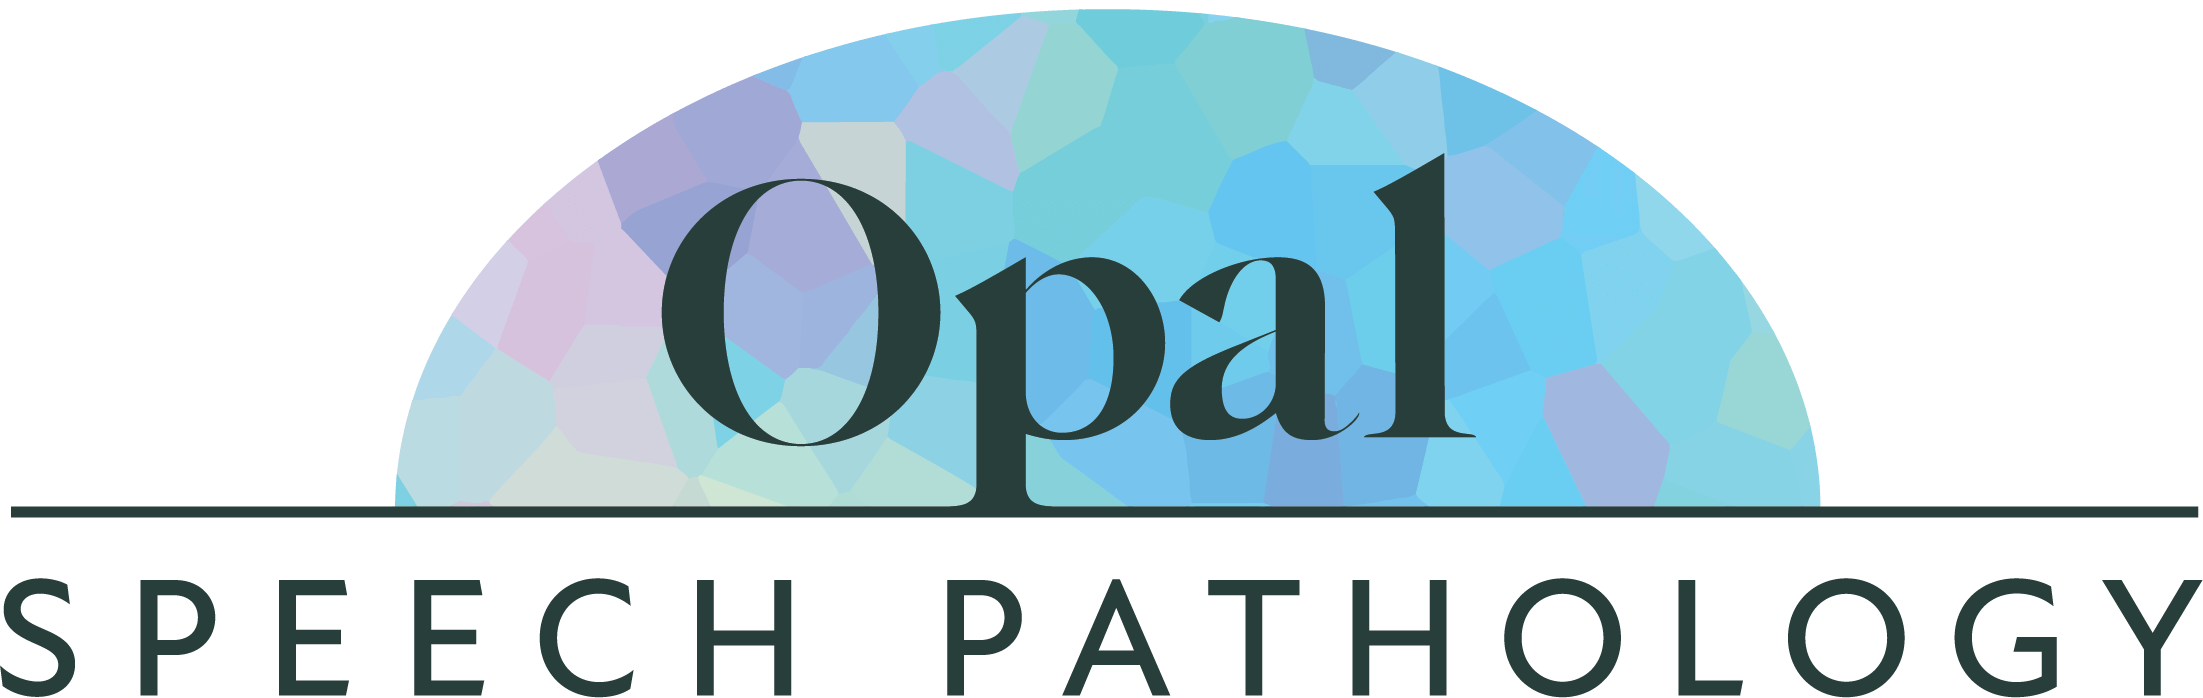 Opal Speech Pathology logo